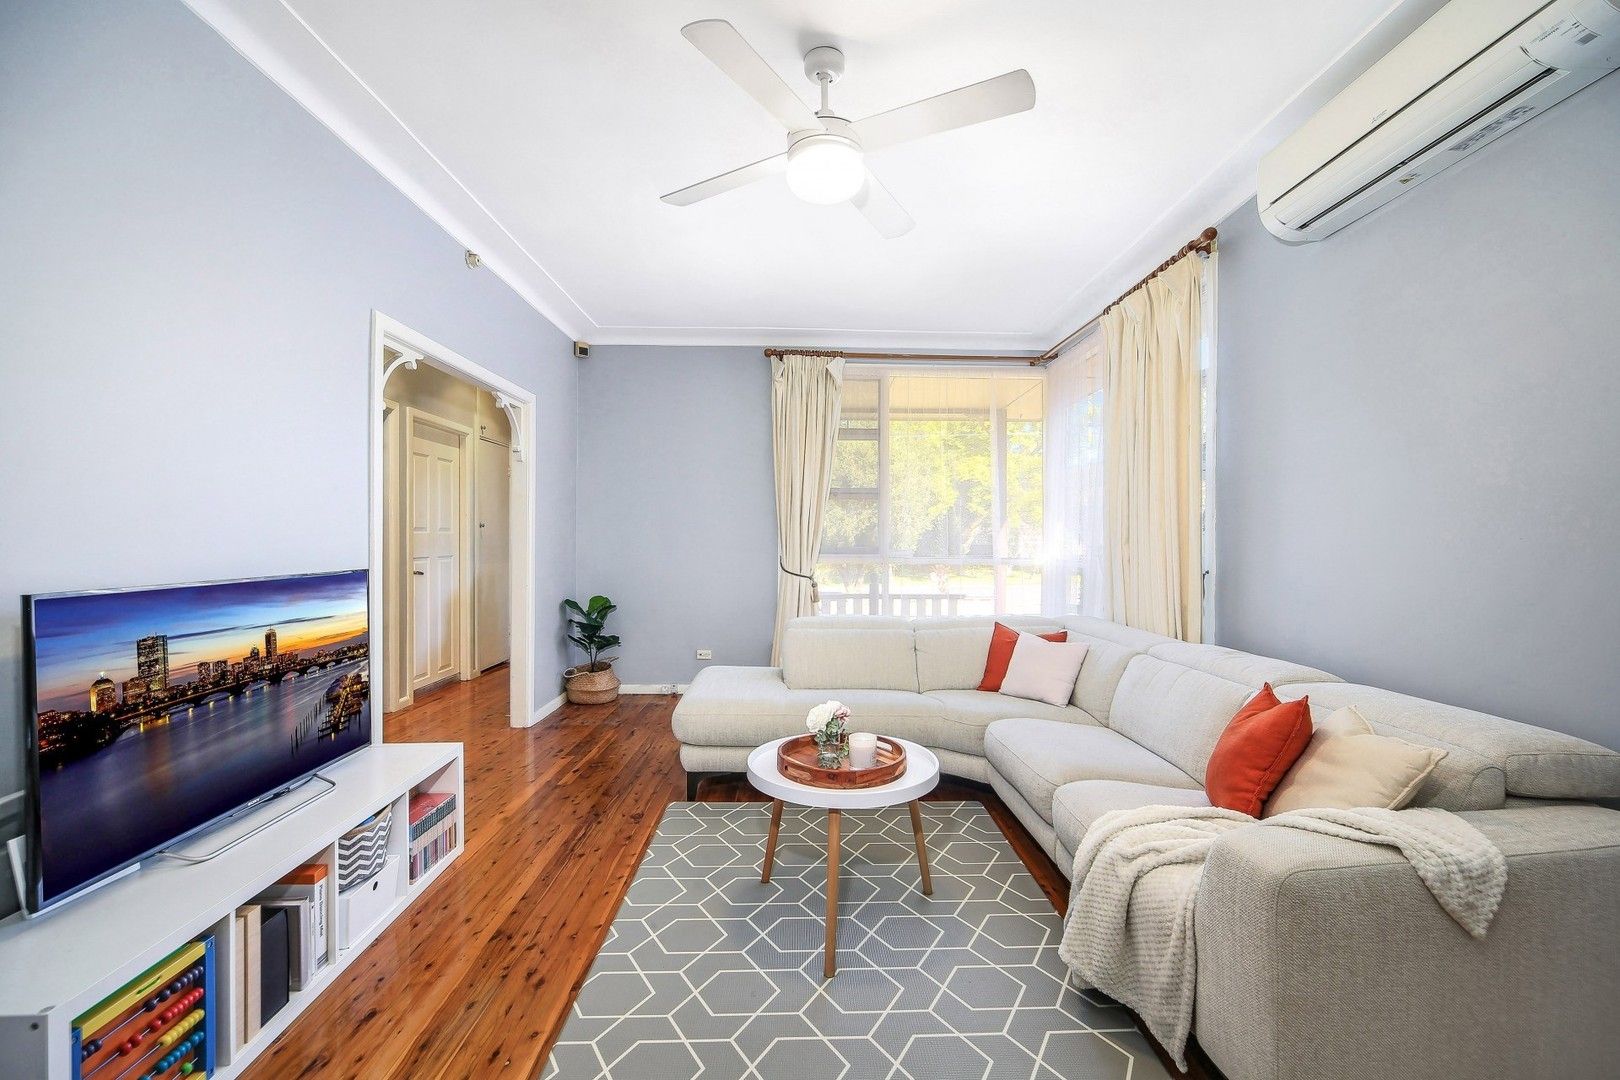 3 bedrooms House in 53 Sturdee Street WENTWORTHVILLE NSW, 2145